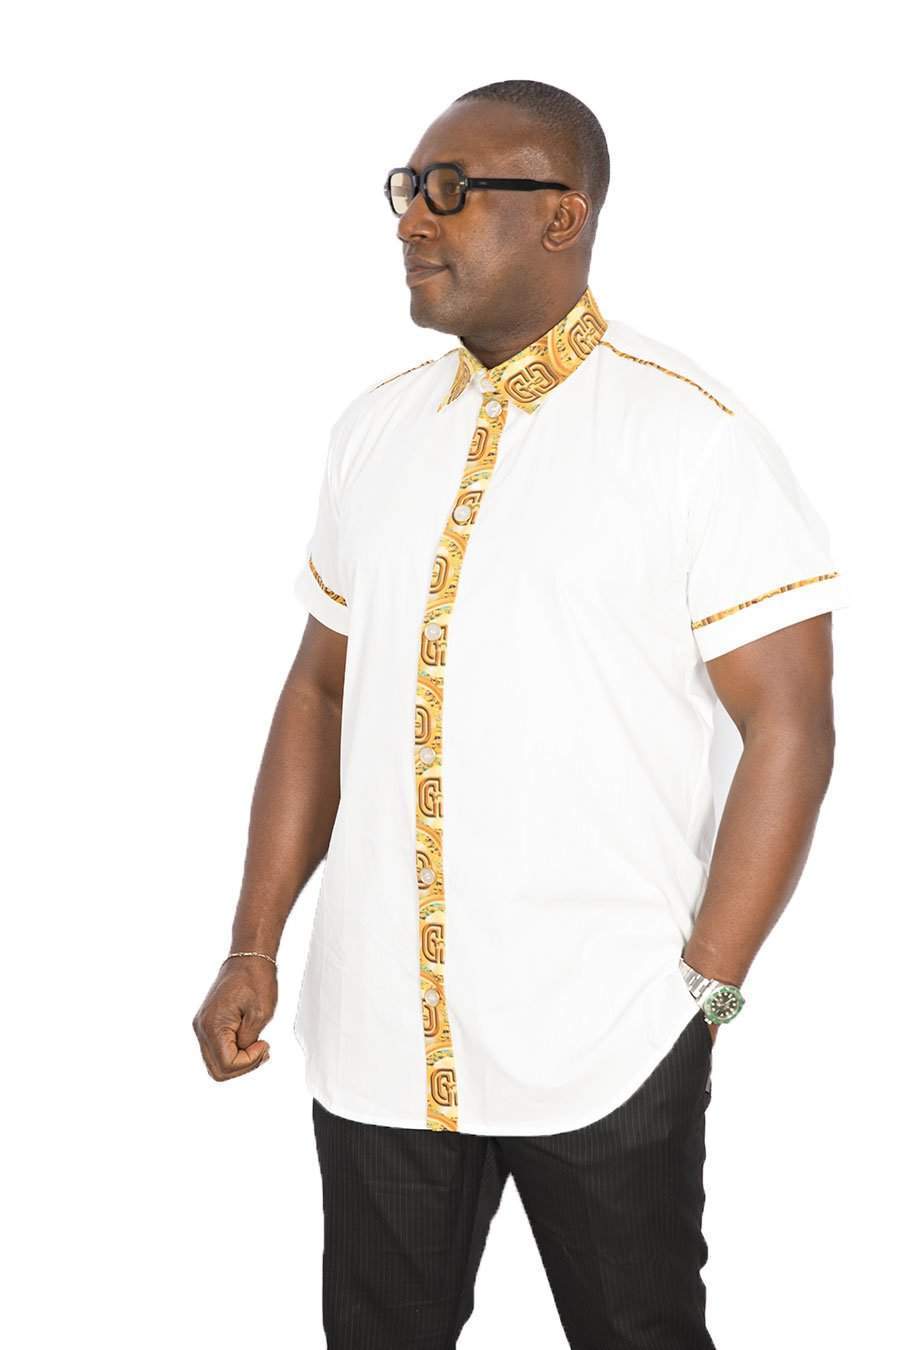 African Men White Shirt Gold Coins-danddclothing-African Men Shirts,African Wear for Men,White